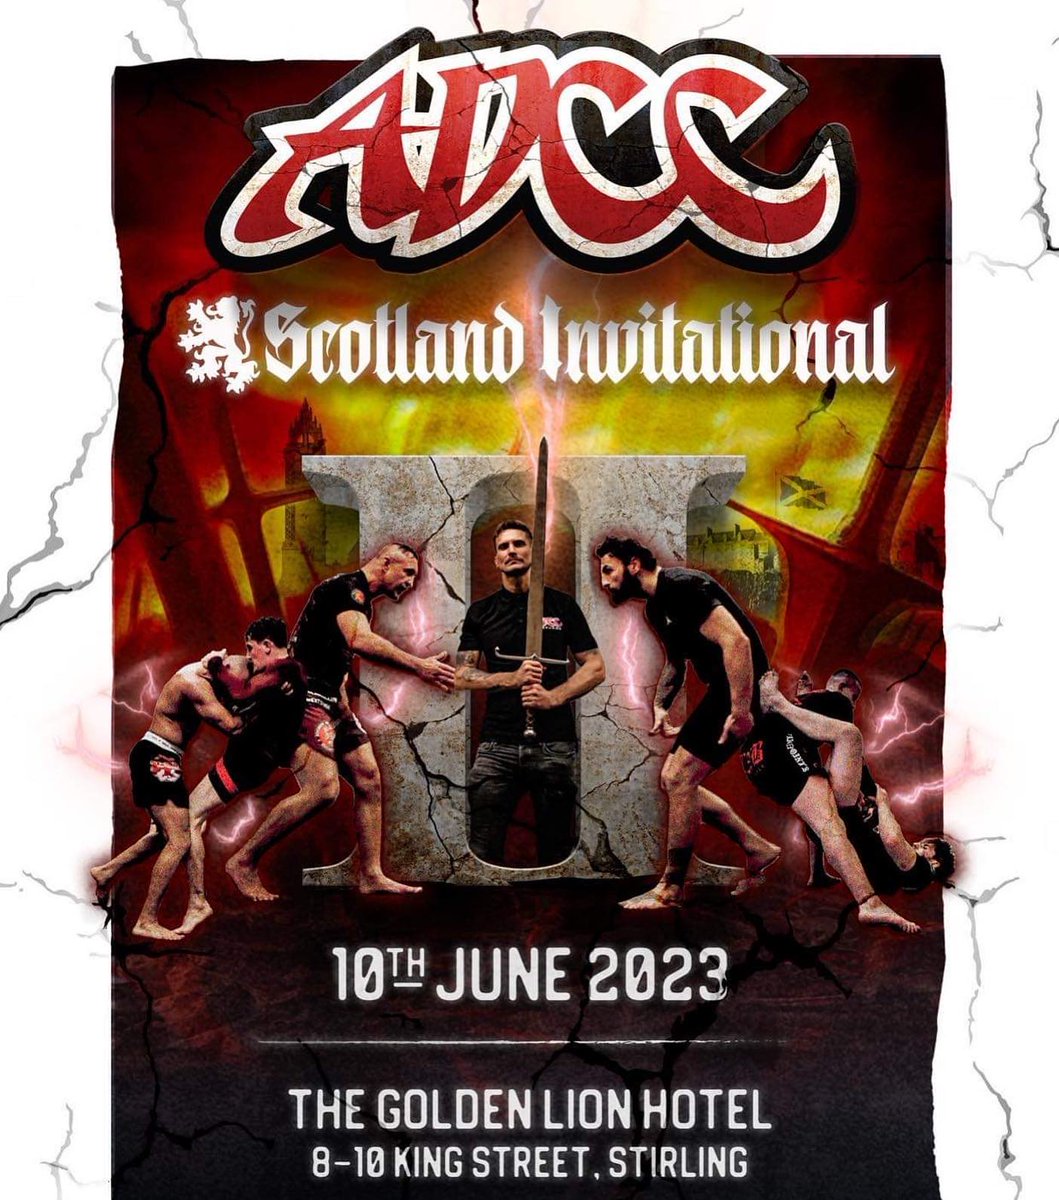 ADCC SCOTLAND INVITATIONAL #2 - Results adcombat.com/adcc-events/ad…